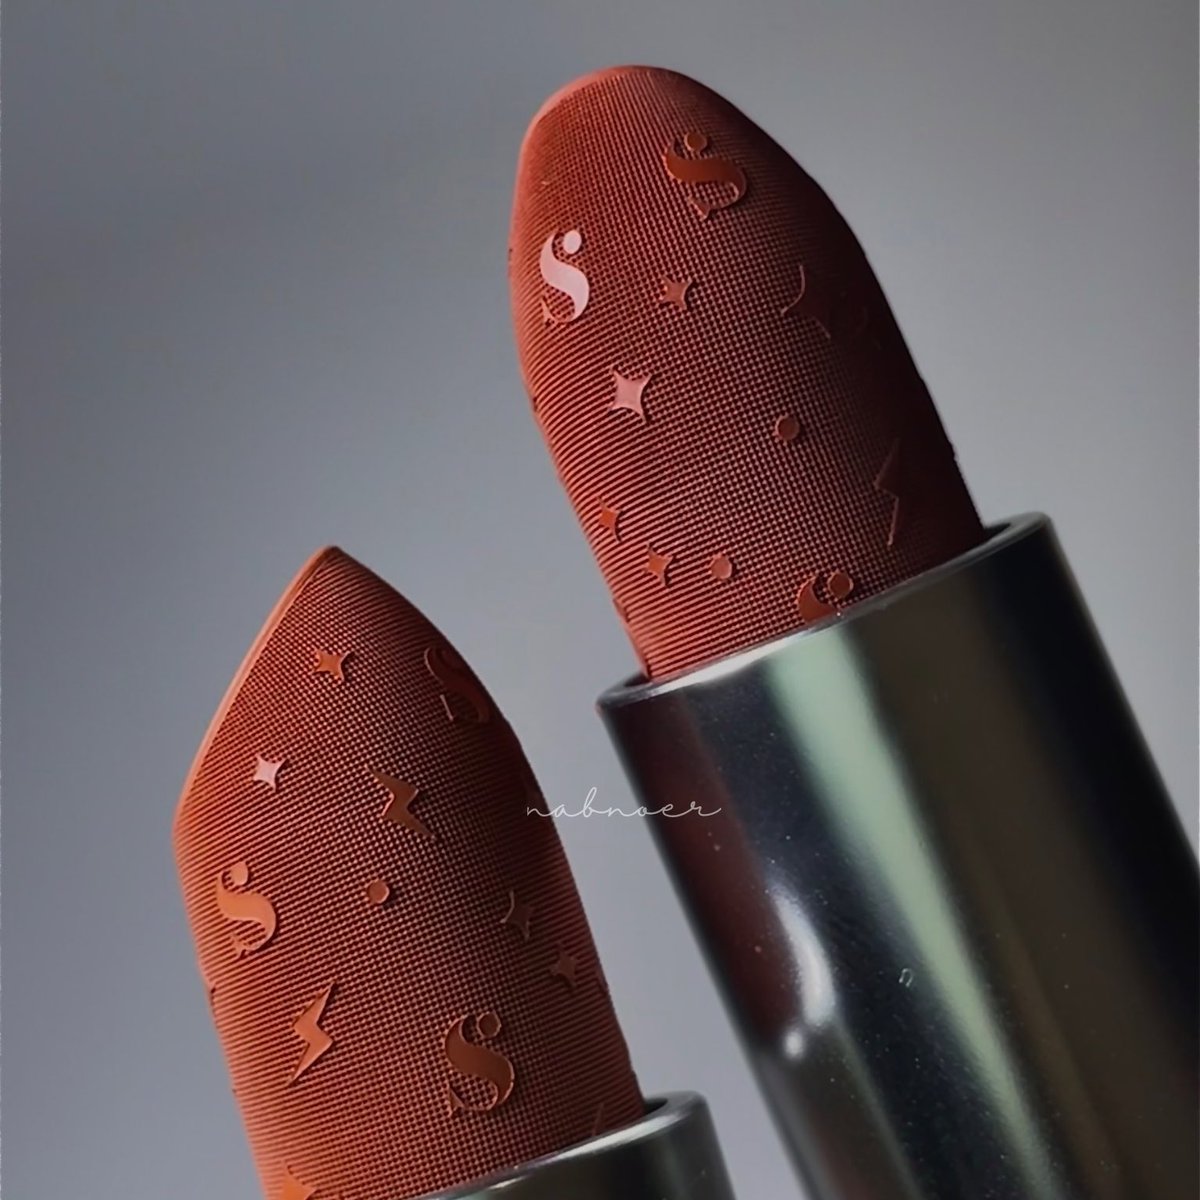 memulai 2024 nanti dengan looks baruu; chocolate ombre lips 🍫✨ amazeddd sama lipstick ini! embossnya cantik sekaliii ehehe beela join the trend 😝